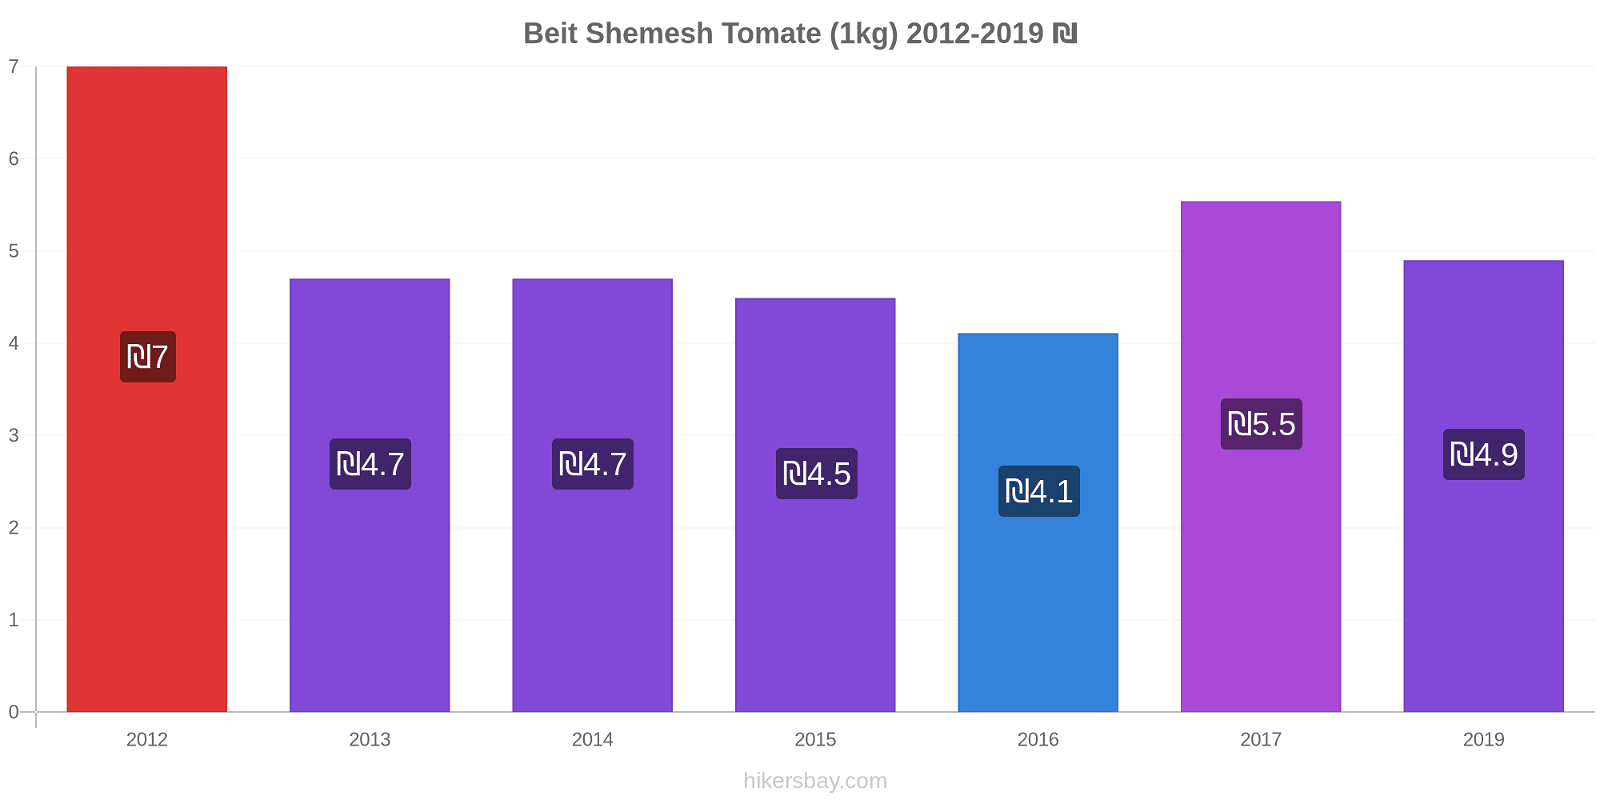 Beit Shemesh cambios de precios Tomate (1kg) hikersbay.com